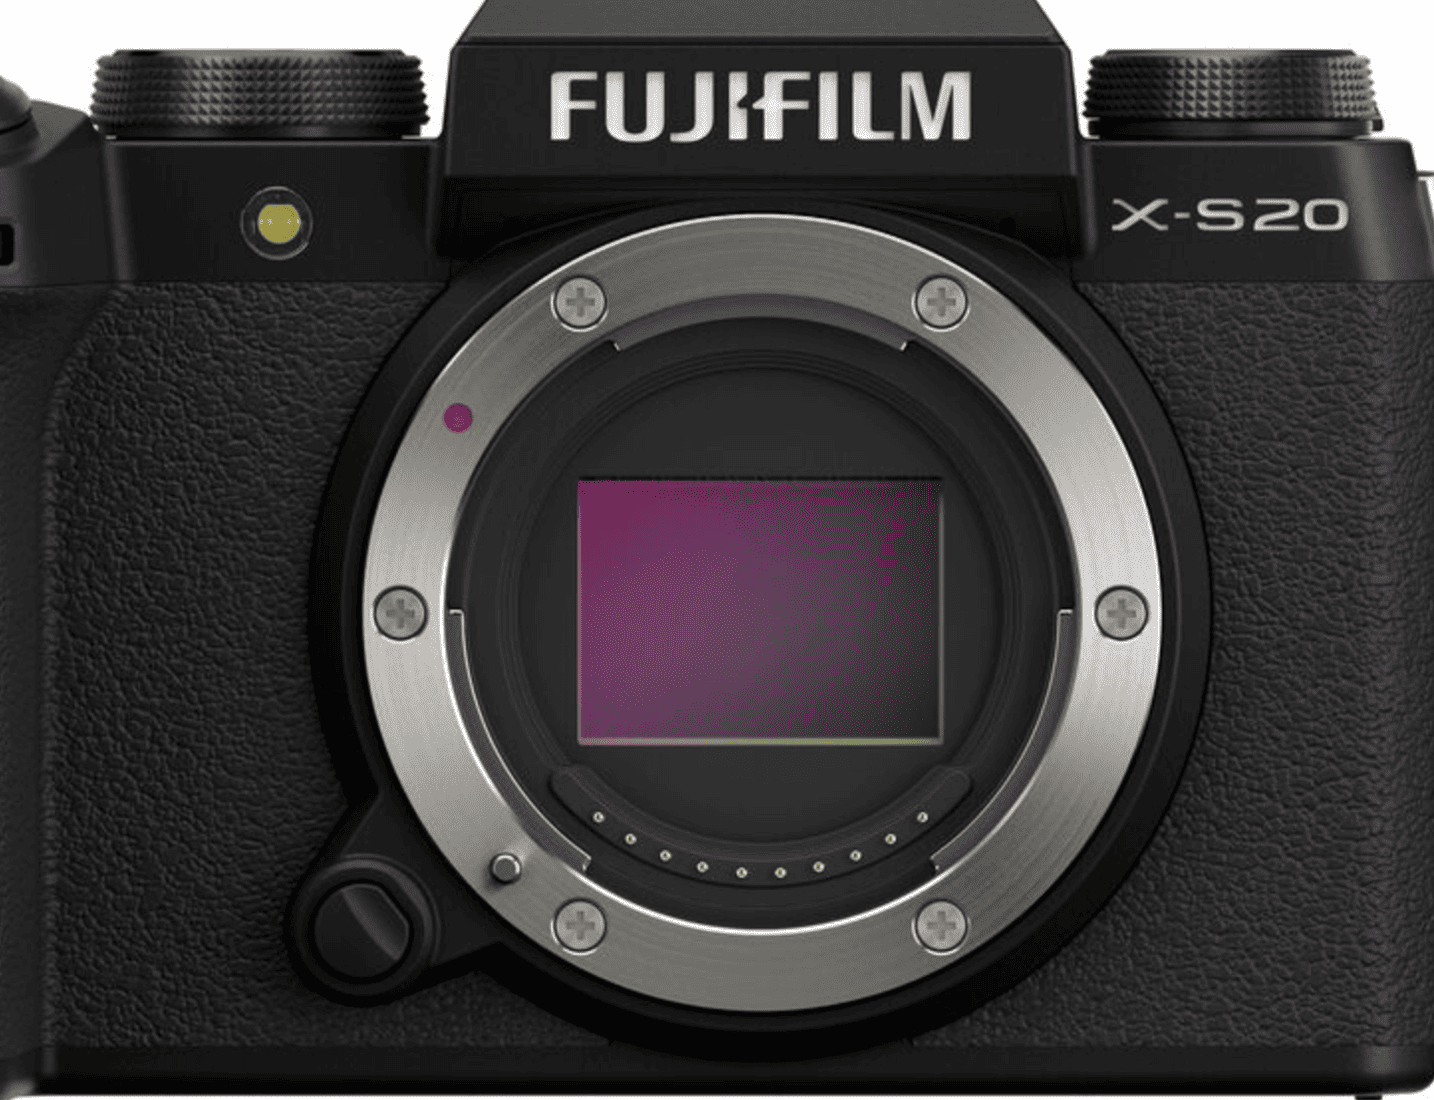 Fujfifilm X-S20 is a 6K content creator, r dream camera